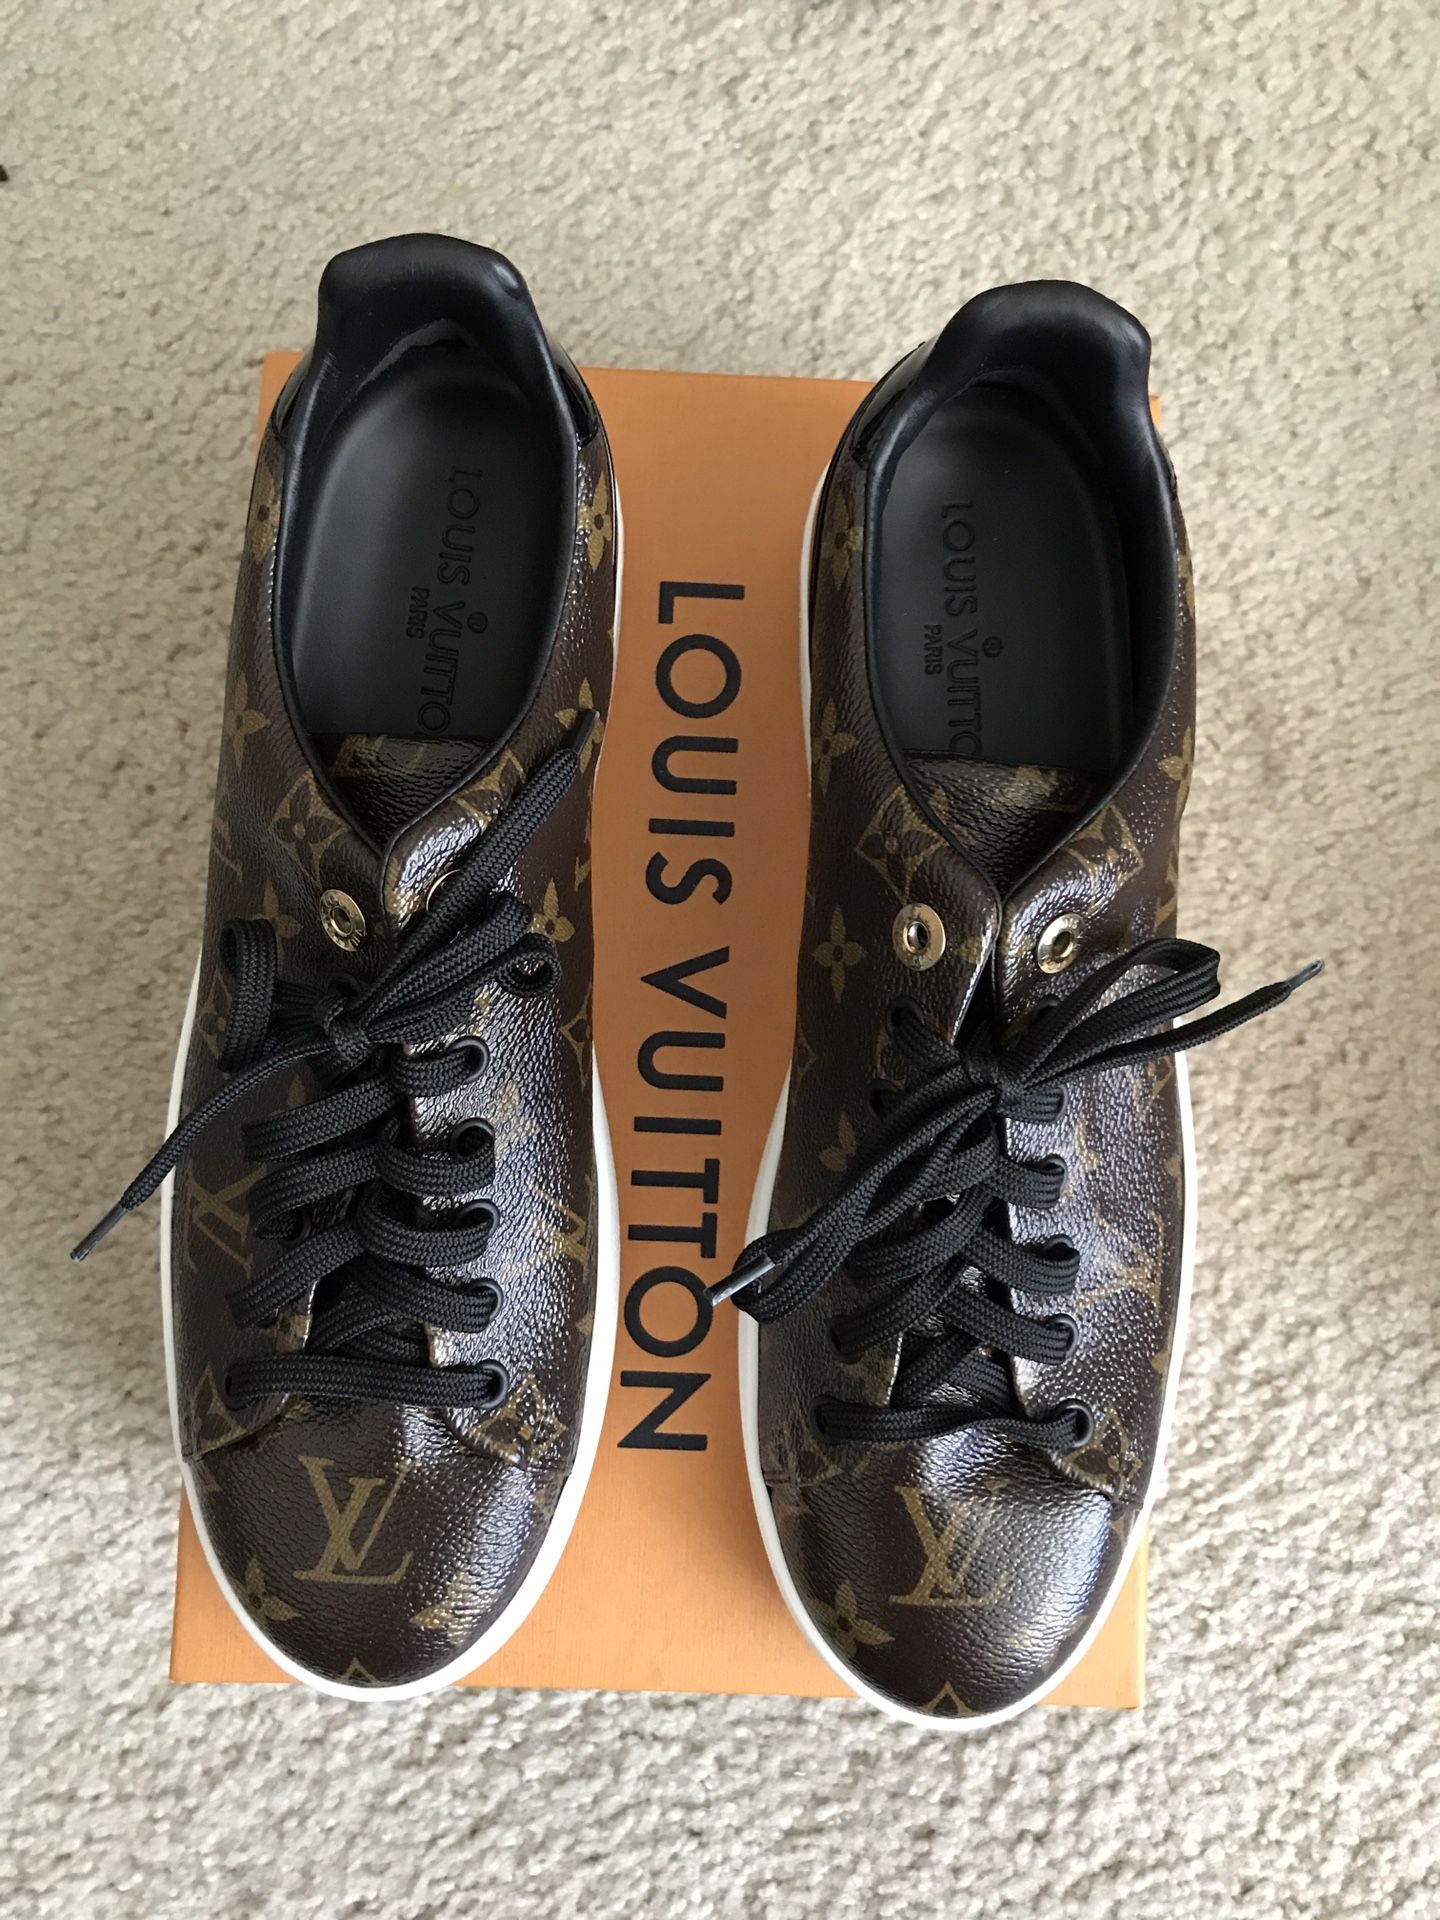 Louis vuitton sneakers